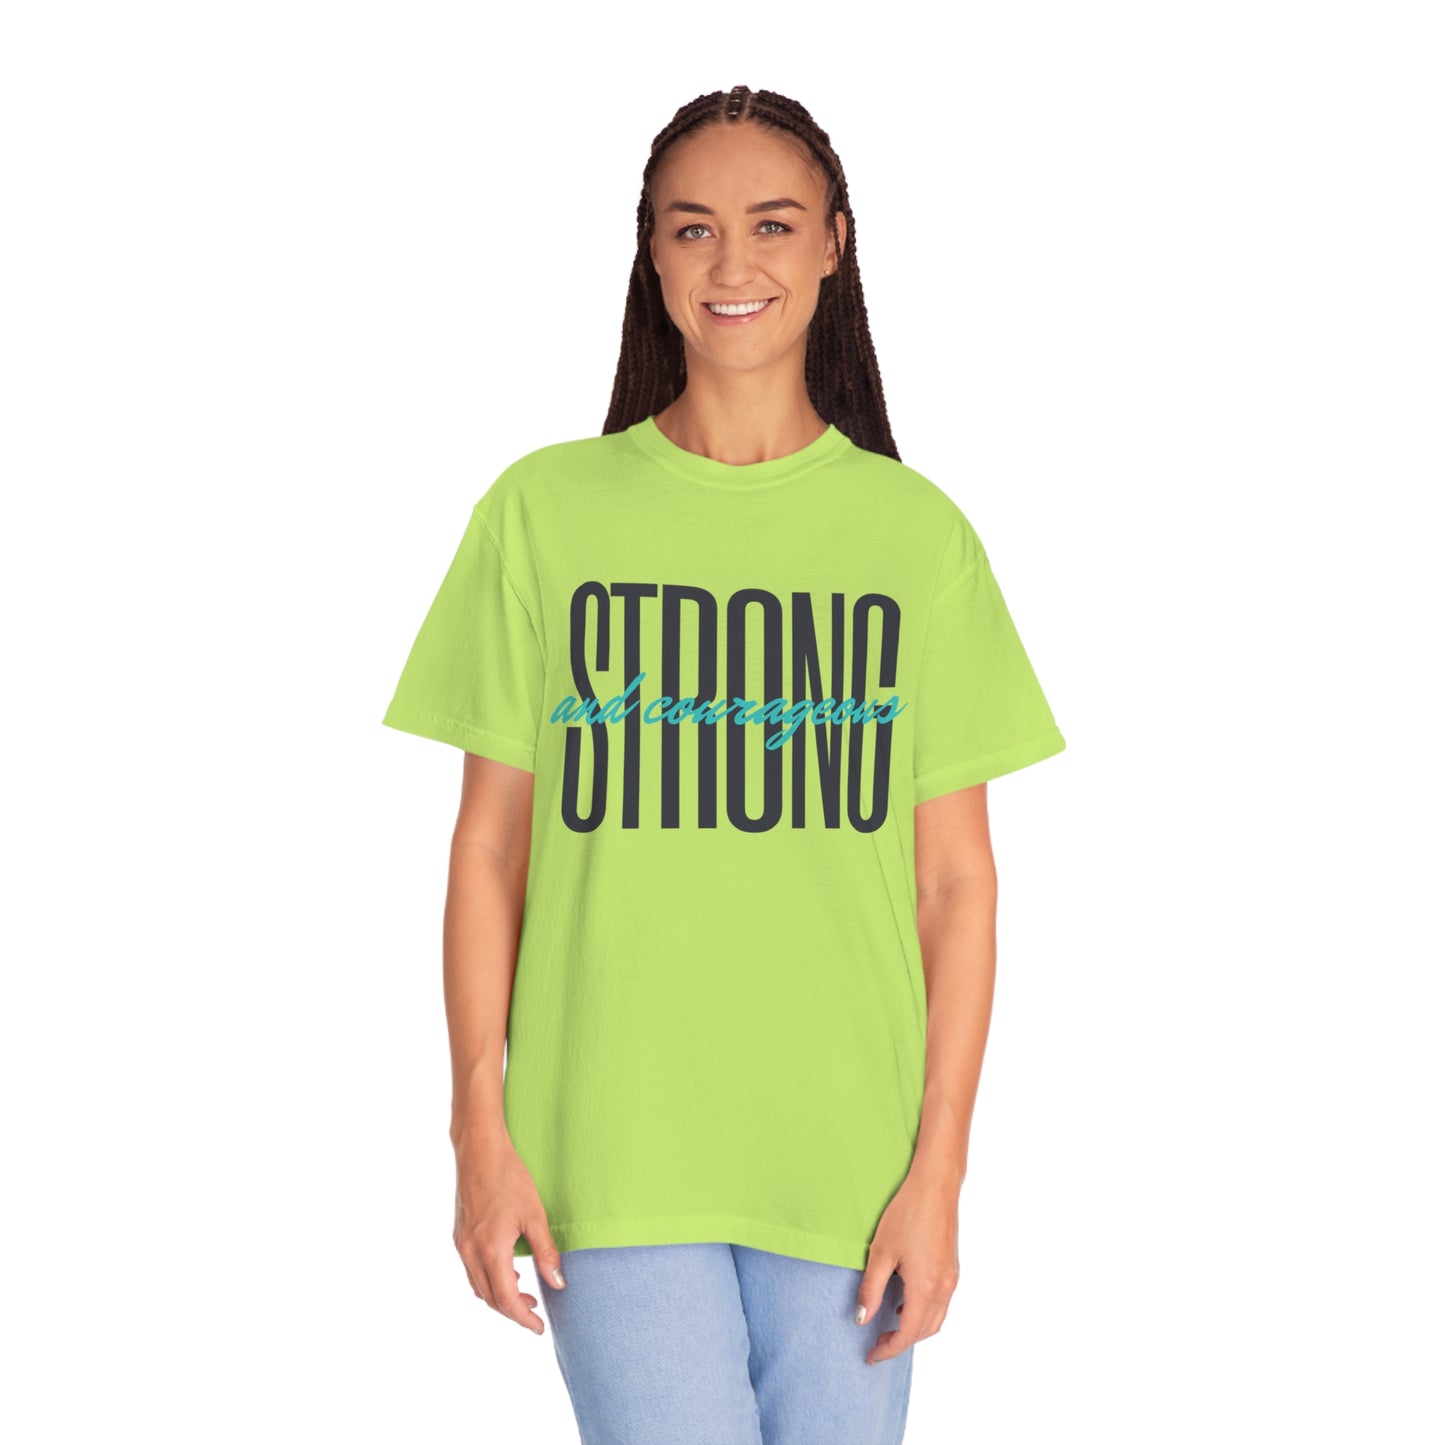 Strong & Courageous T-shirt